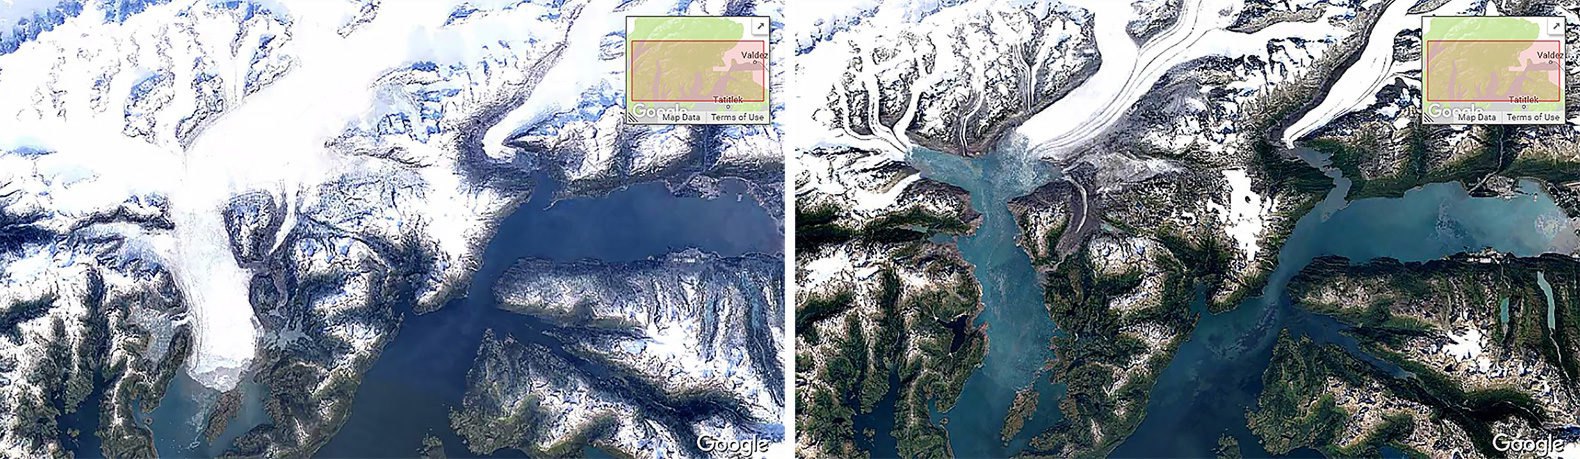 Google Timelapse Columbia Glacier 1580x459 1